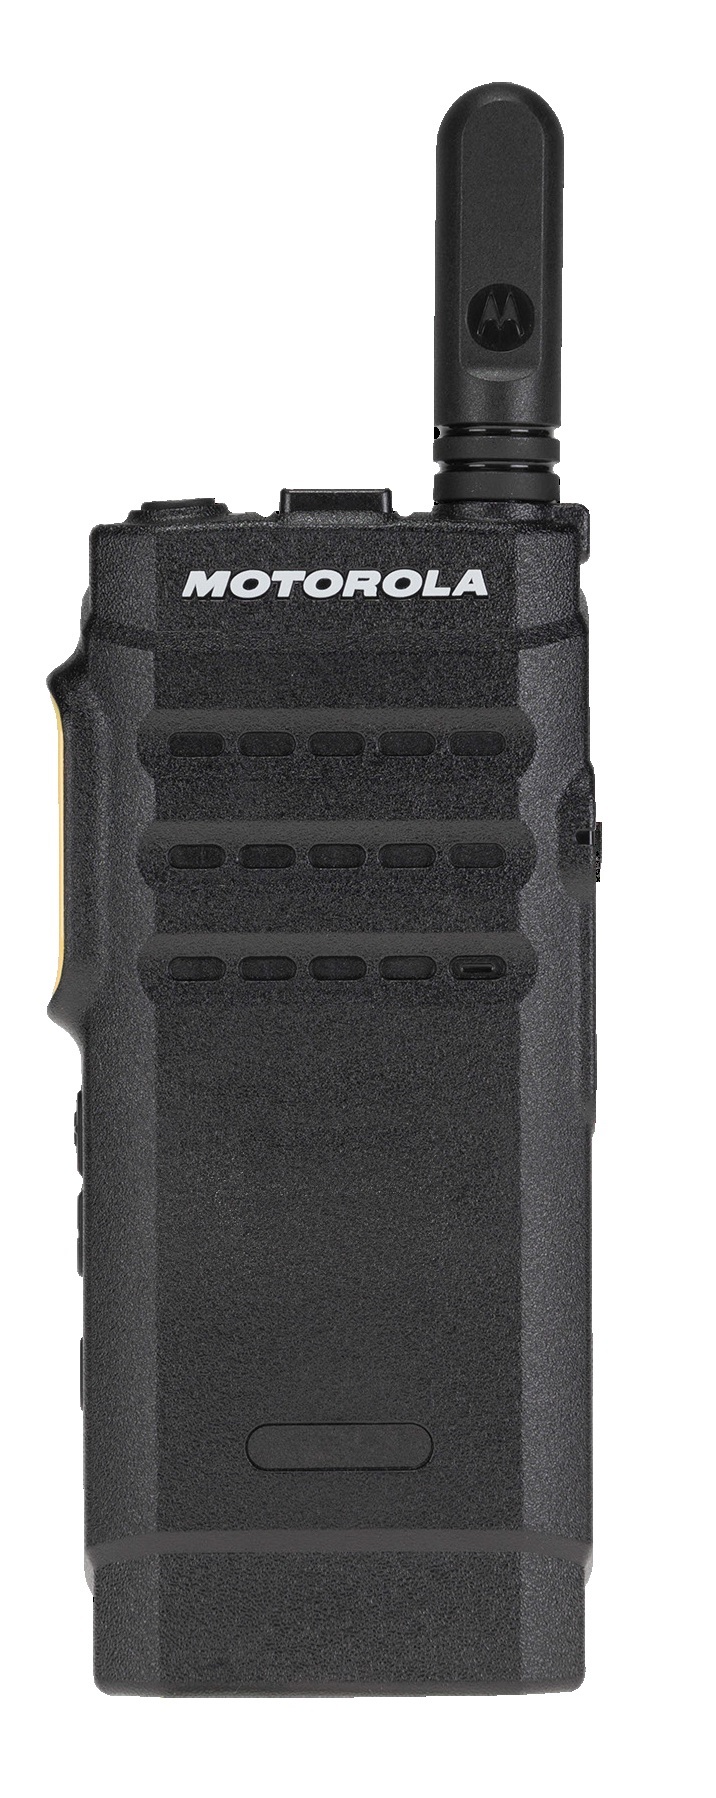 Motorola SL300, VHF (136-174 MHz), 3 Watts, 2 Channels, Digital/Analog, Non-Display